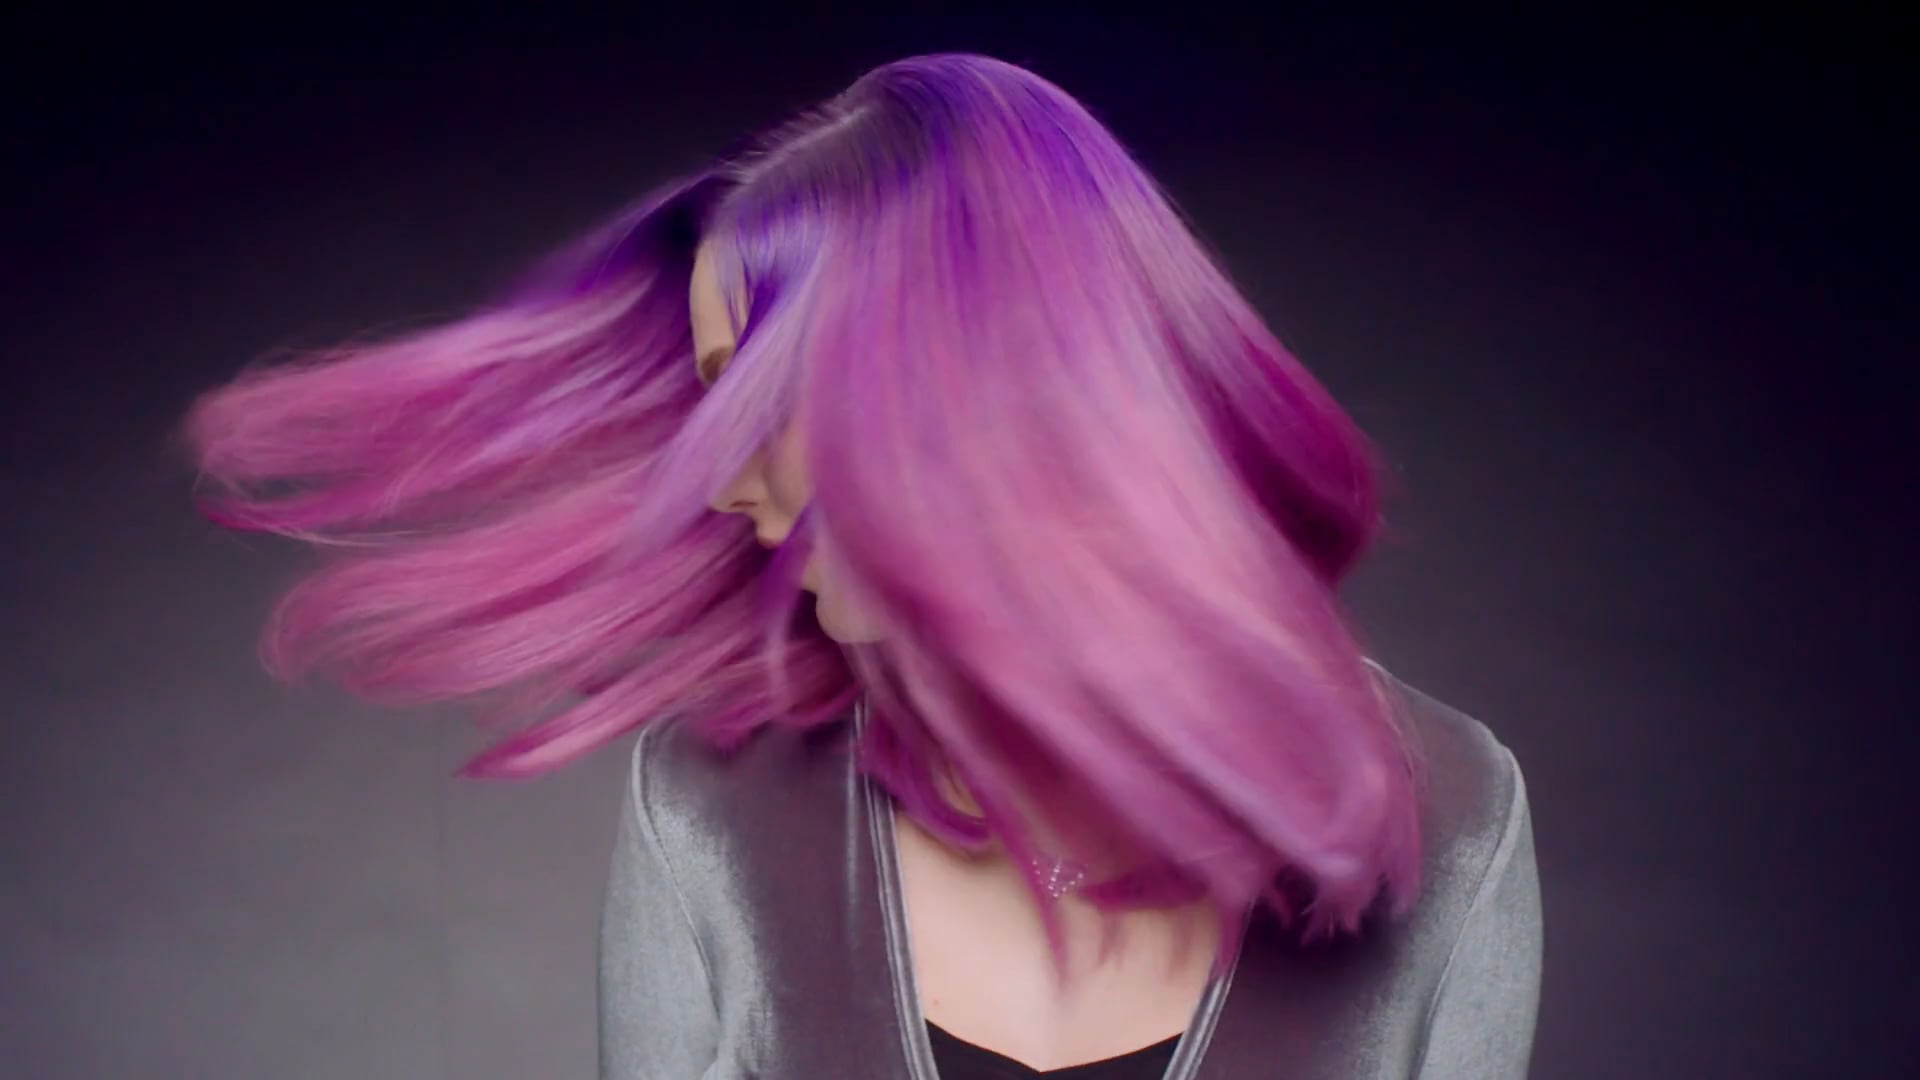 Schwarzkopf: How to get purple hair